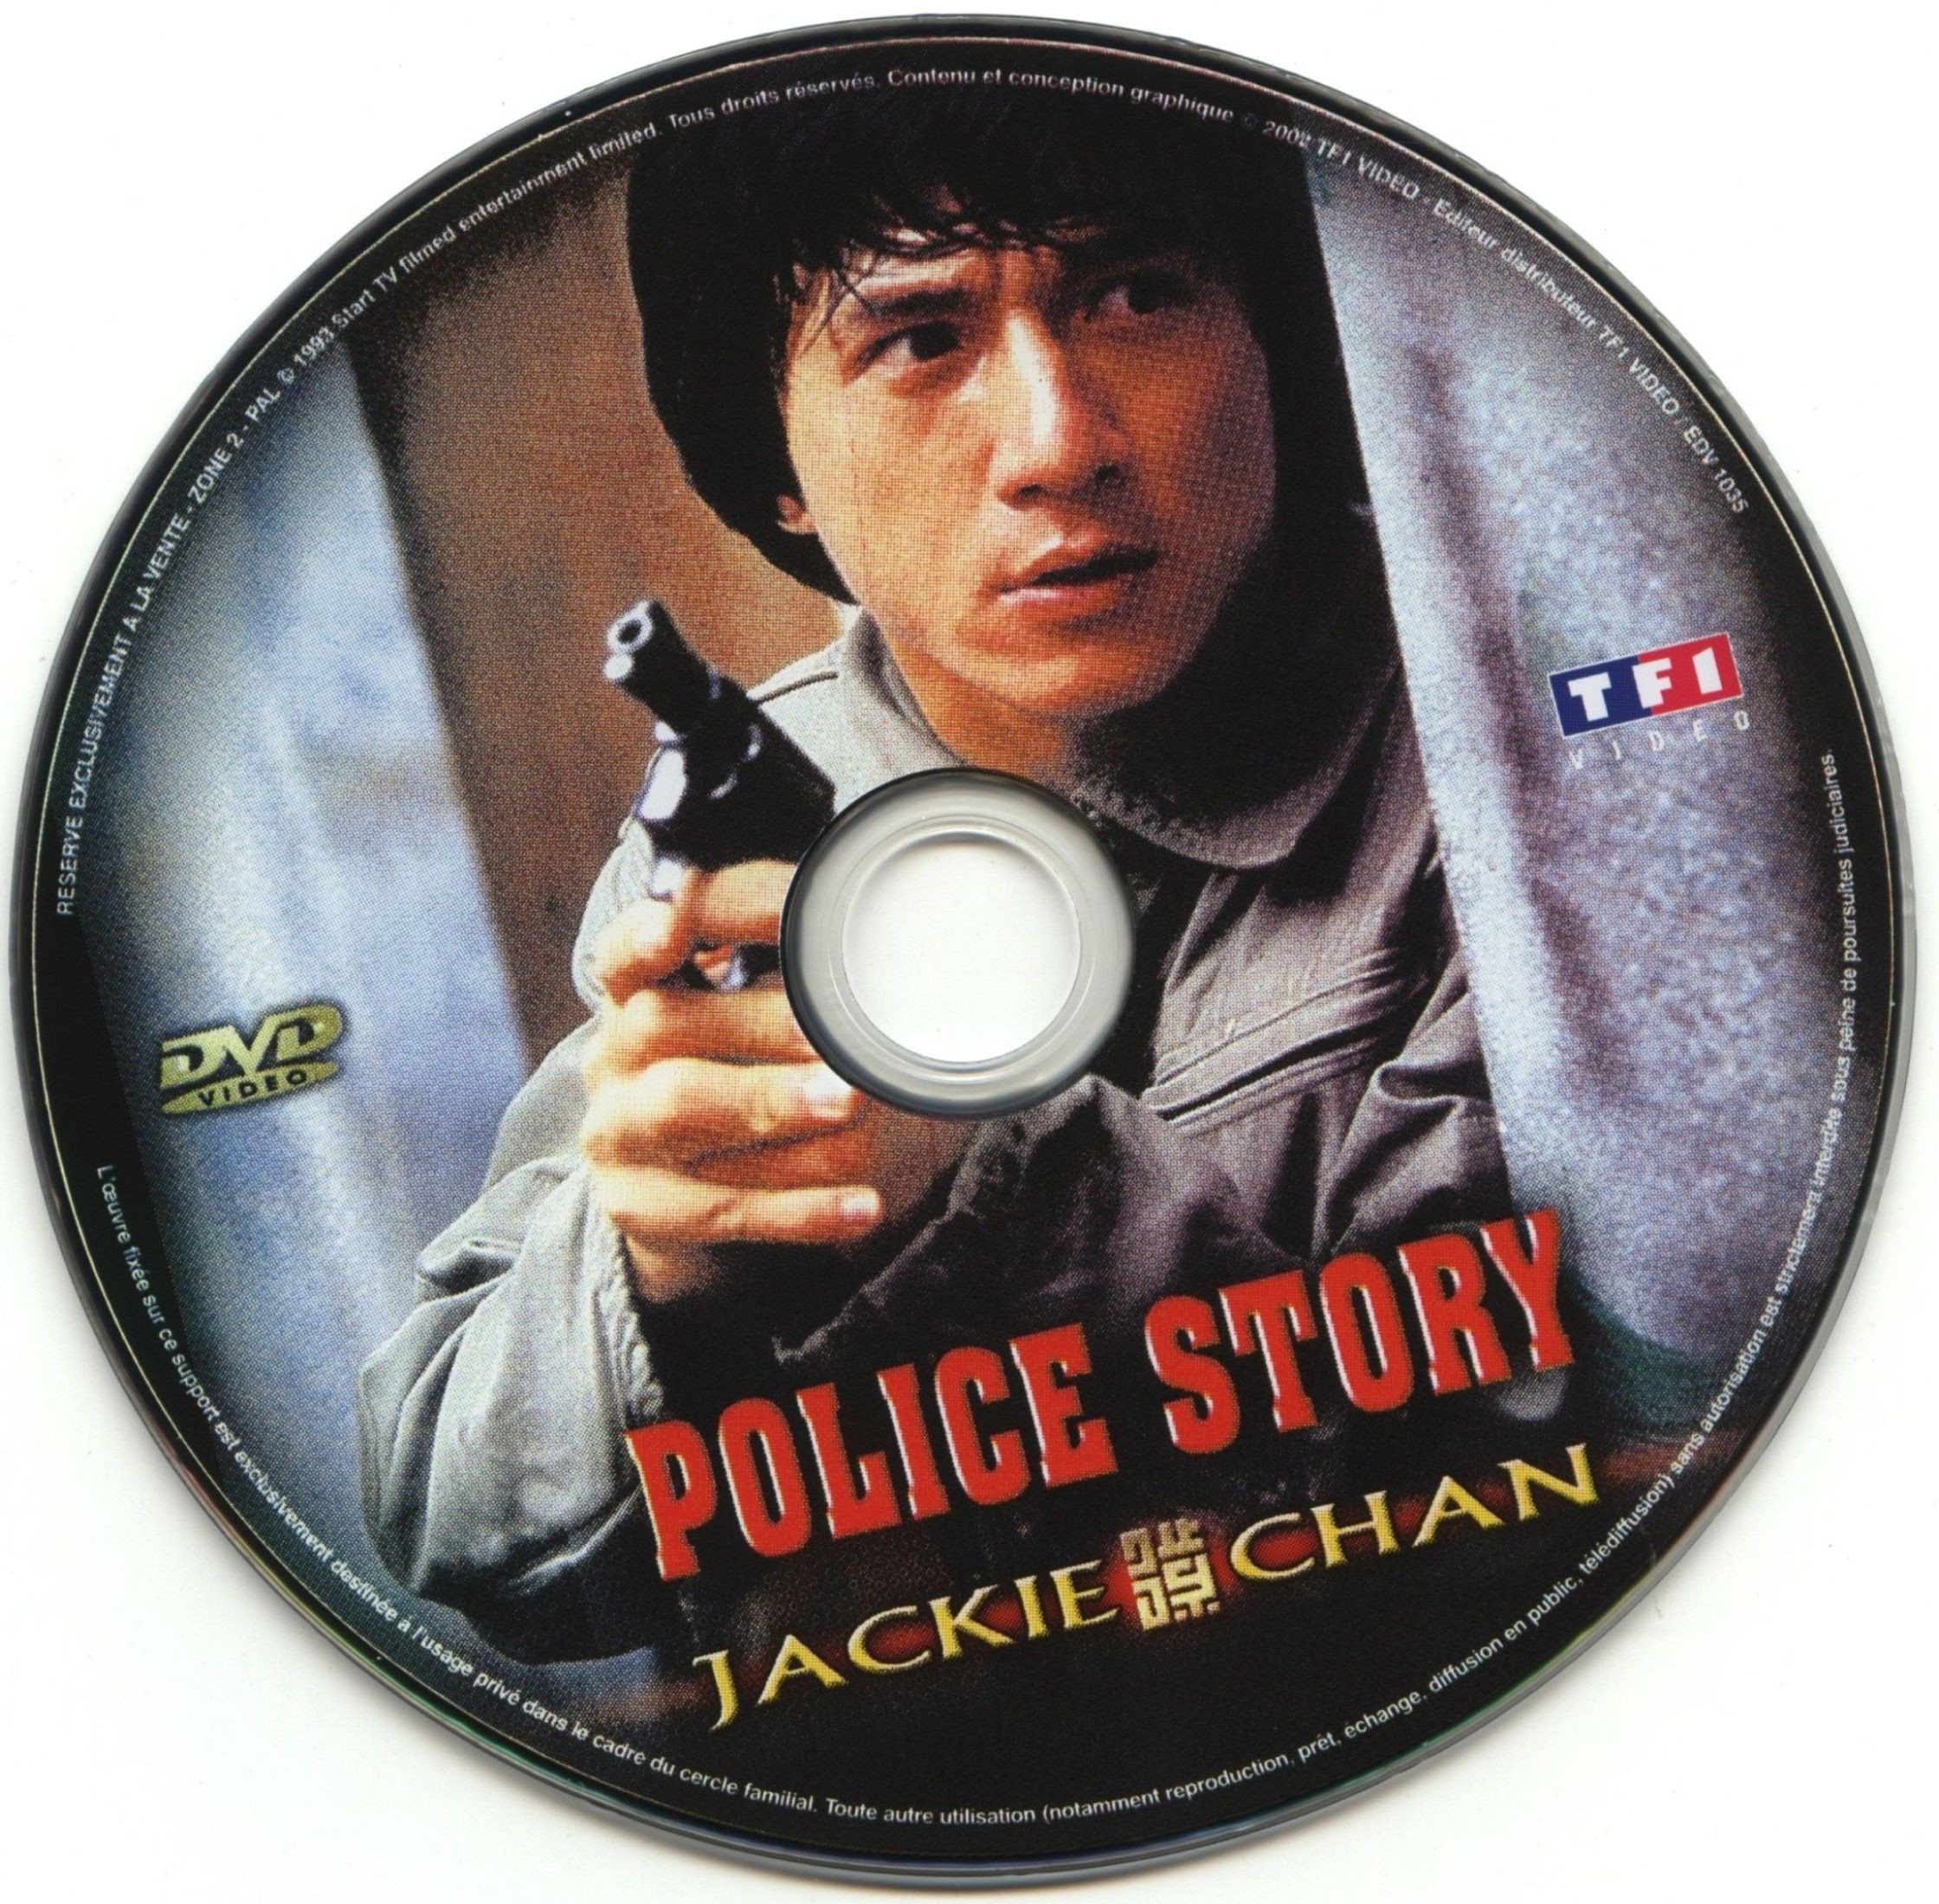 Police story